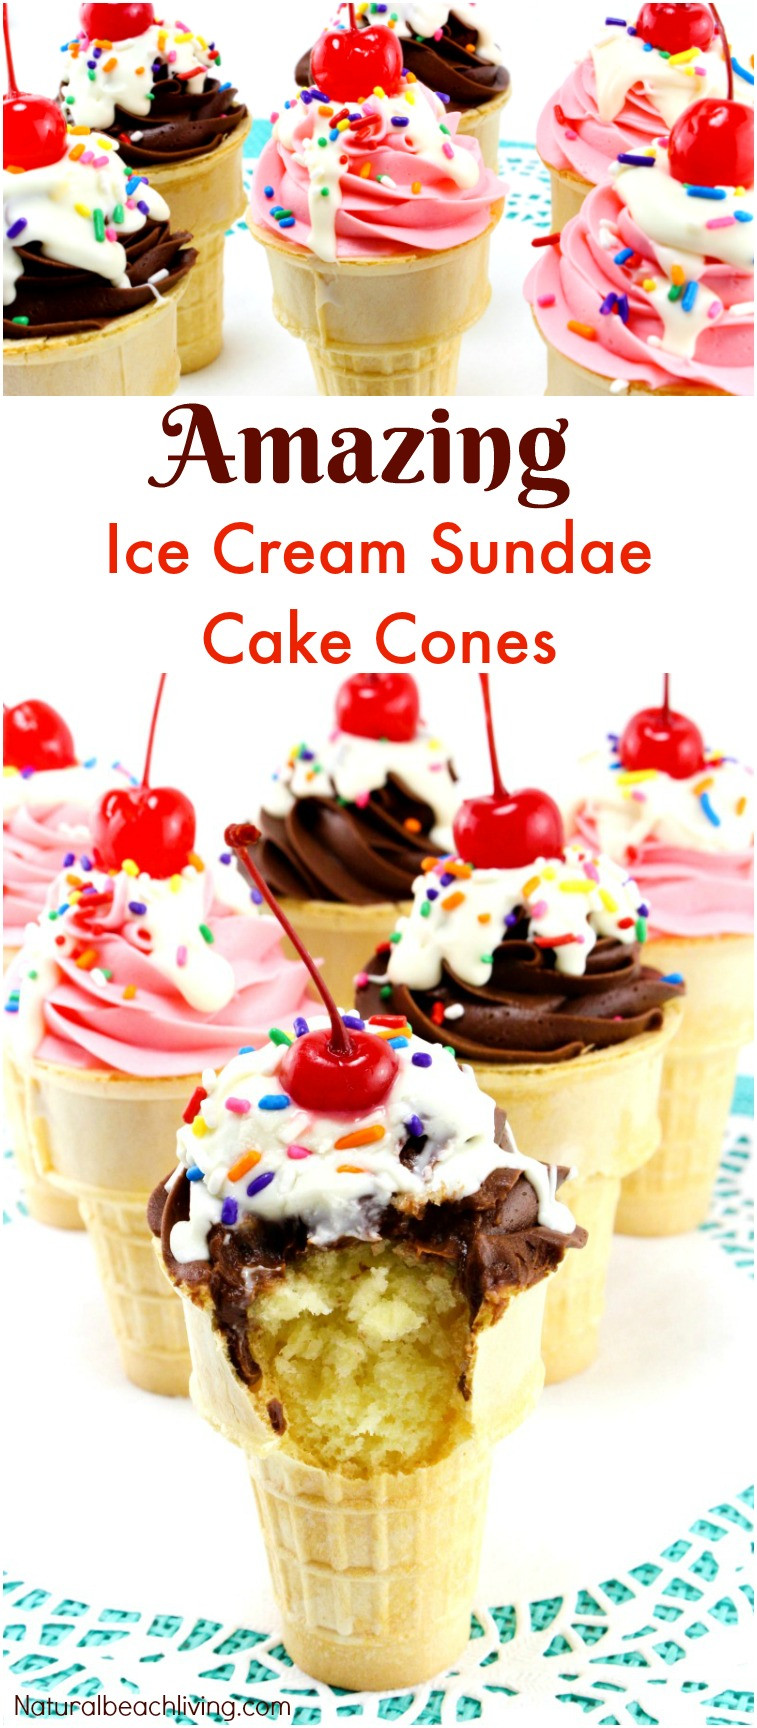 Easy Ice Cream Cake Recipes For Kids
 How to Make Amazing Sundae Ice Cream Cake Cones Natural